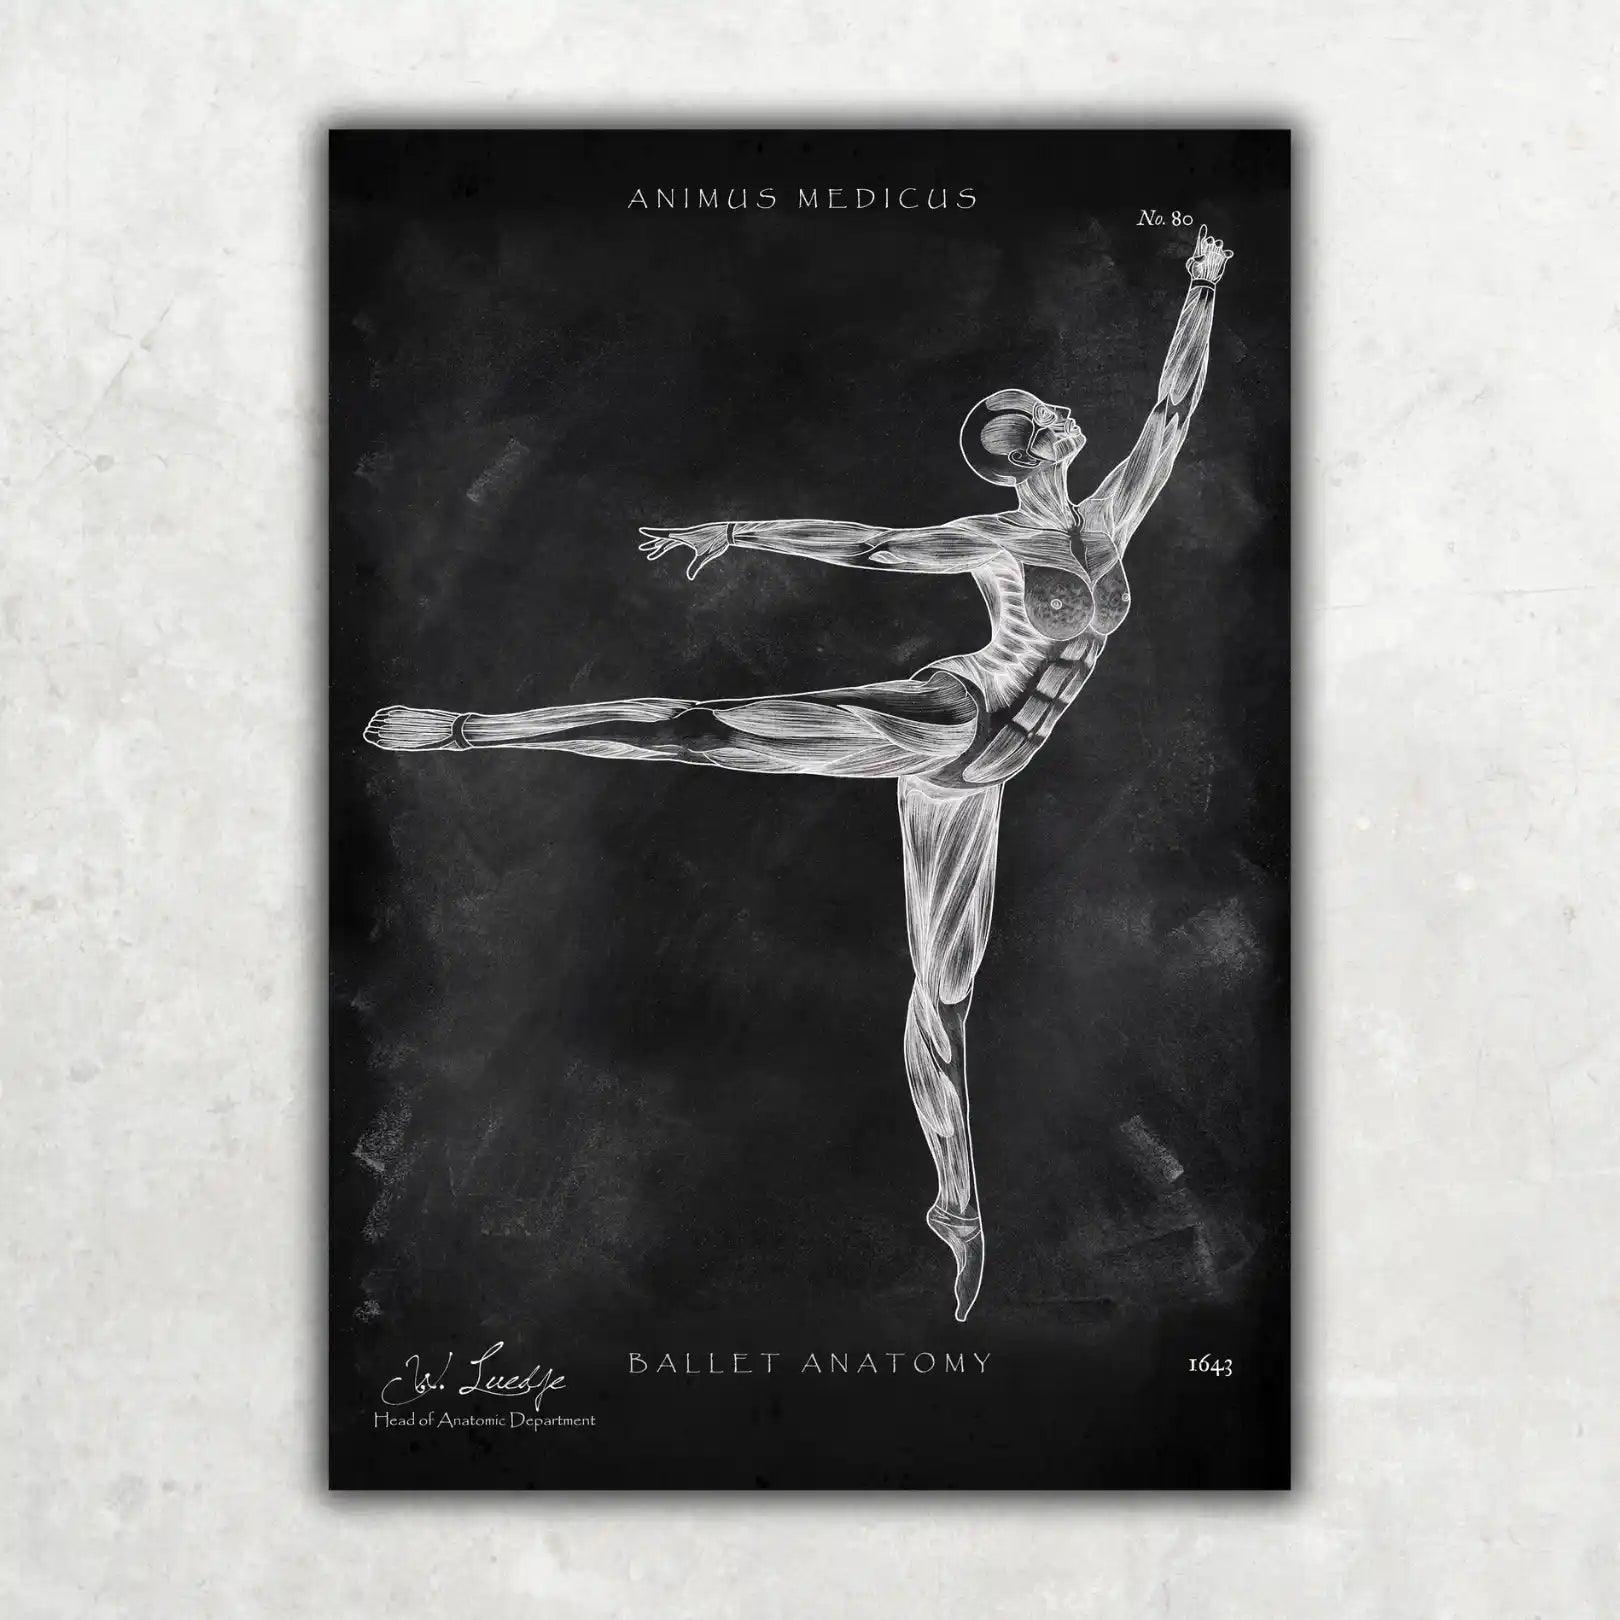 Ballett Anatomie Poster - Chalkboard - Animus Medicus GmbH